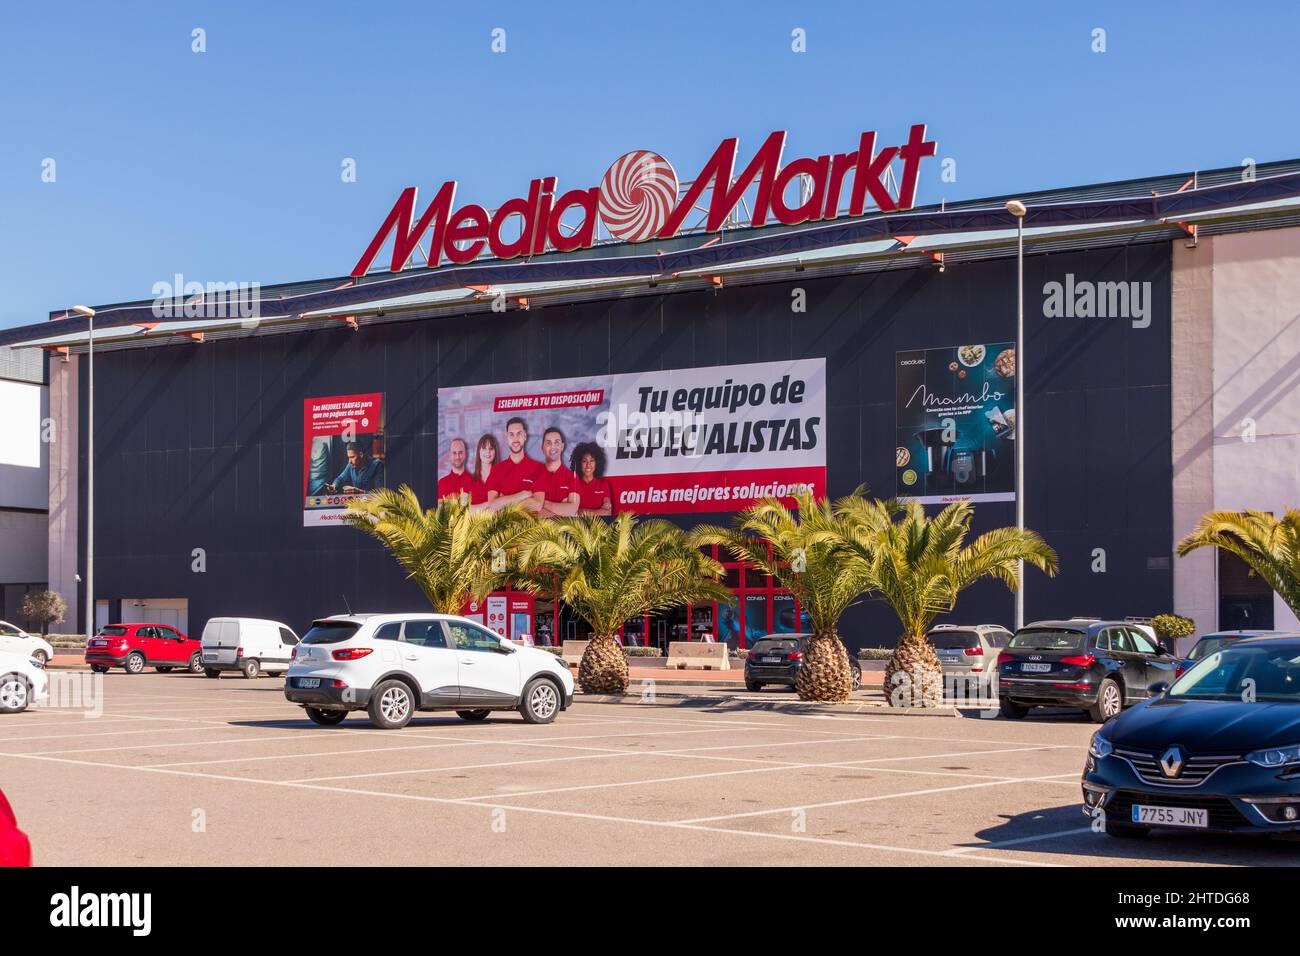 Mediamarkt at Parque Almenara, Lorca, Murcia, Spain Stock Photo